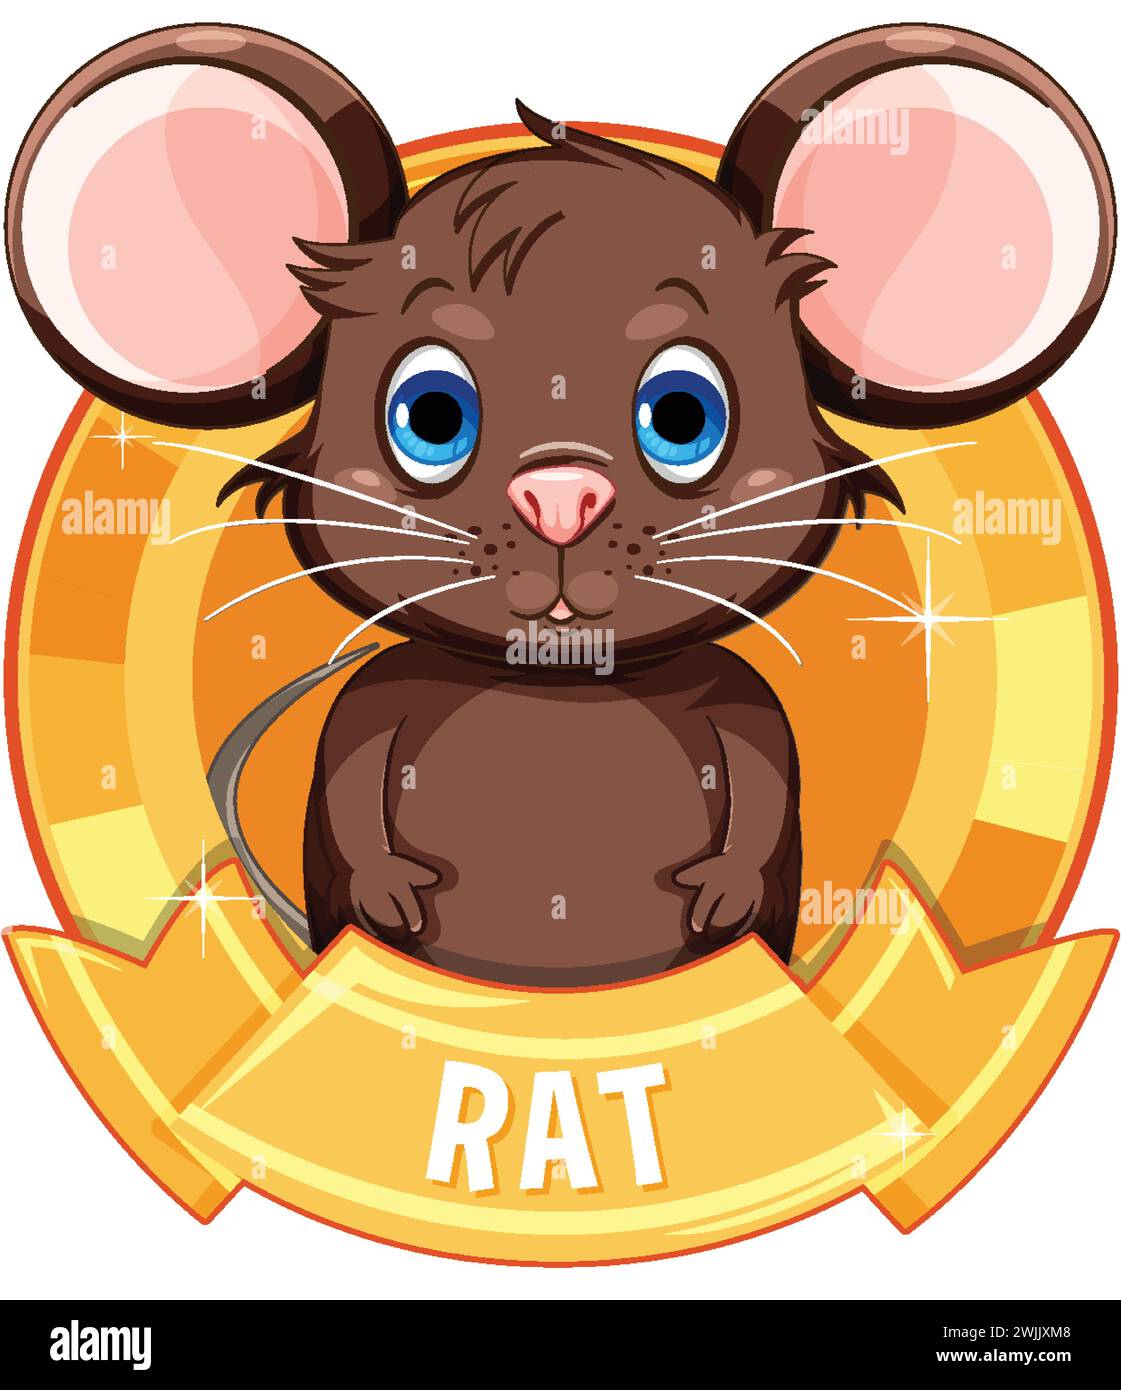 Adorable brown rat inside a shiny golden badge Stock Vector